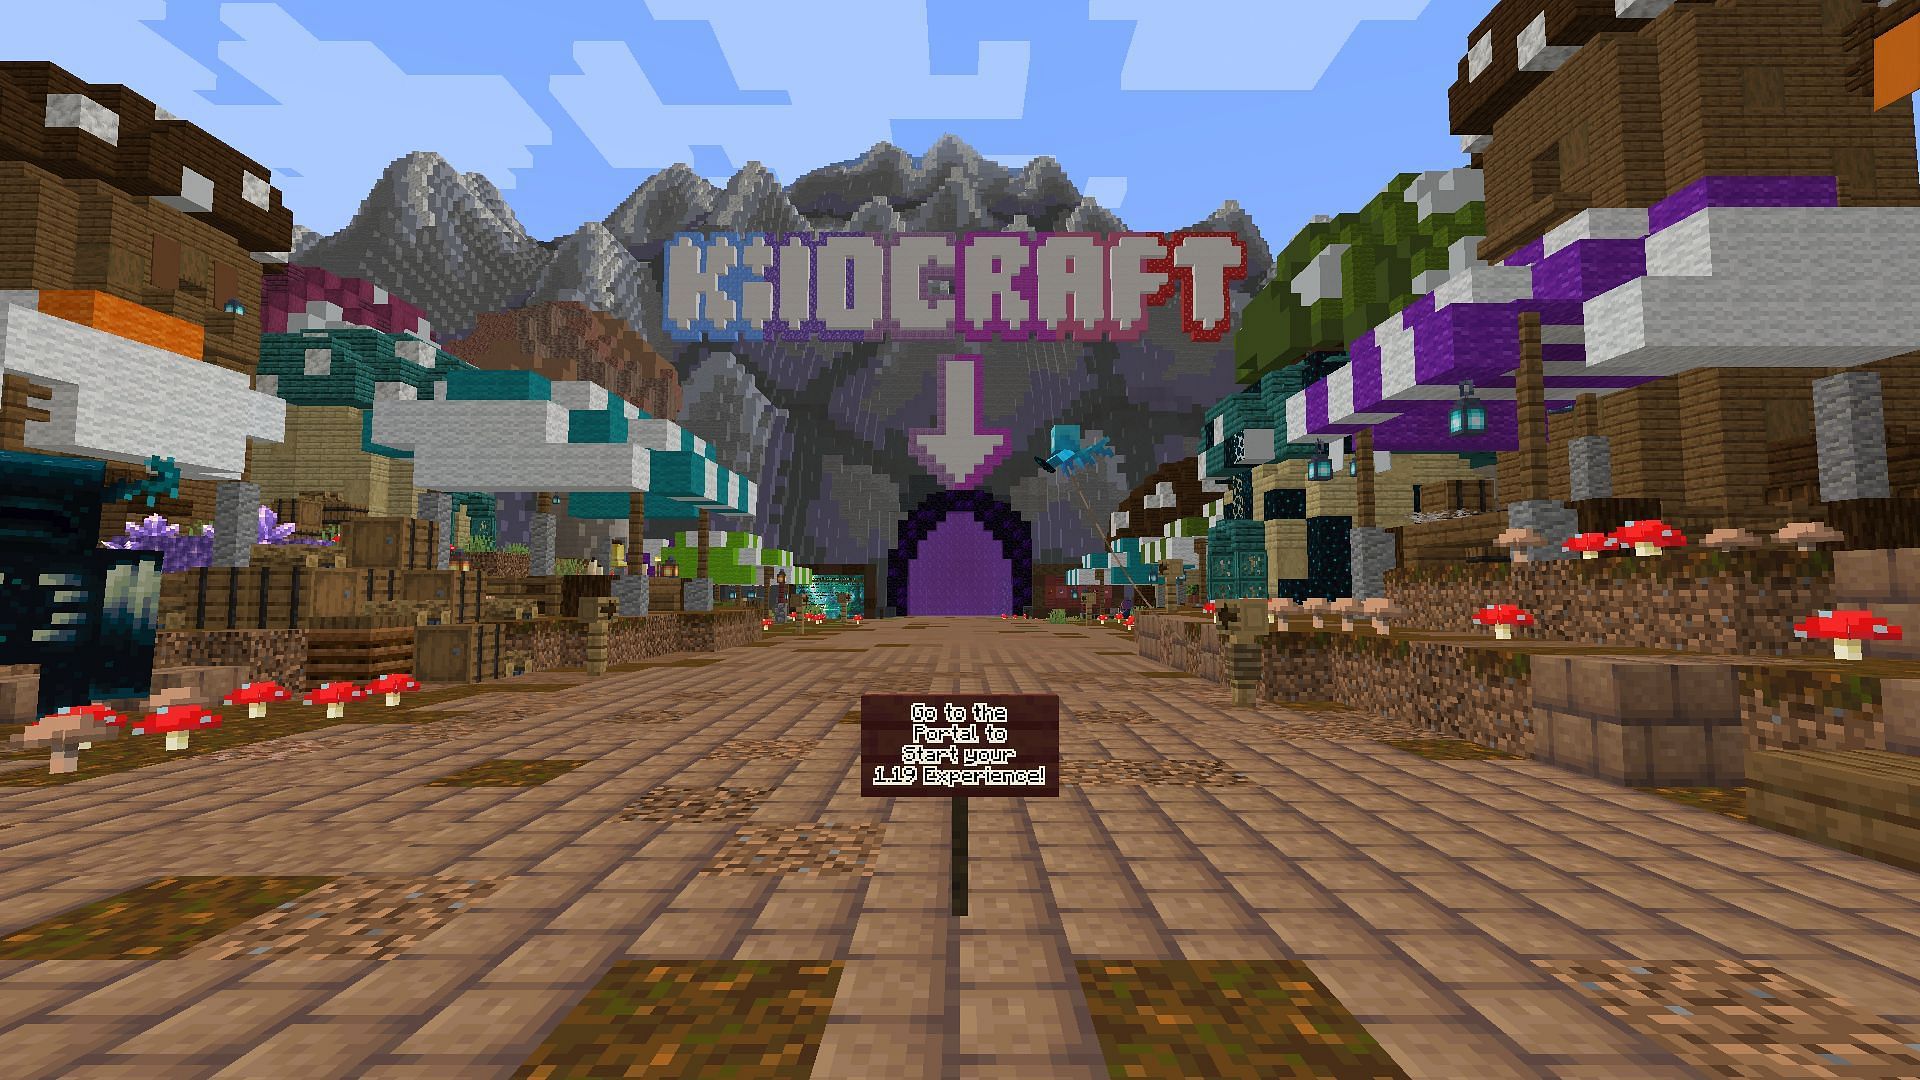 The spawn area for the Kilocraft server (Image via Minecraft)